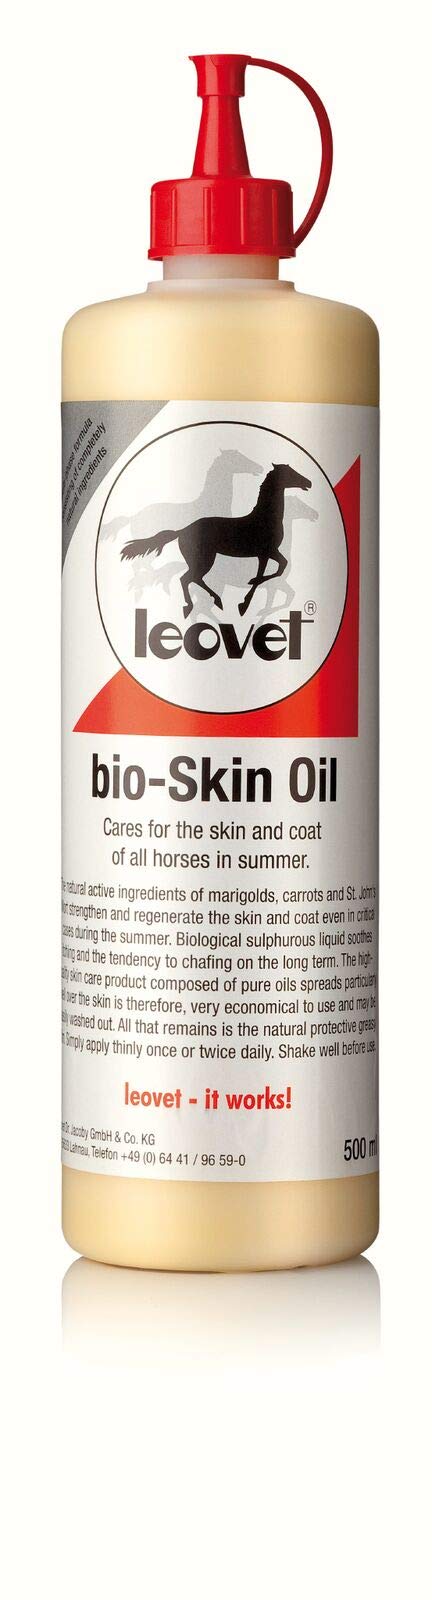 Leovet Bio-Skin Oil Horse Care and First Aid, 500 ml - PawsPlanet Australia